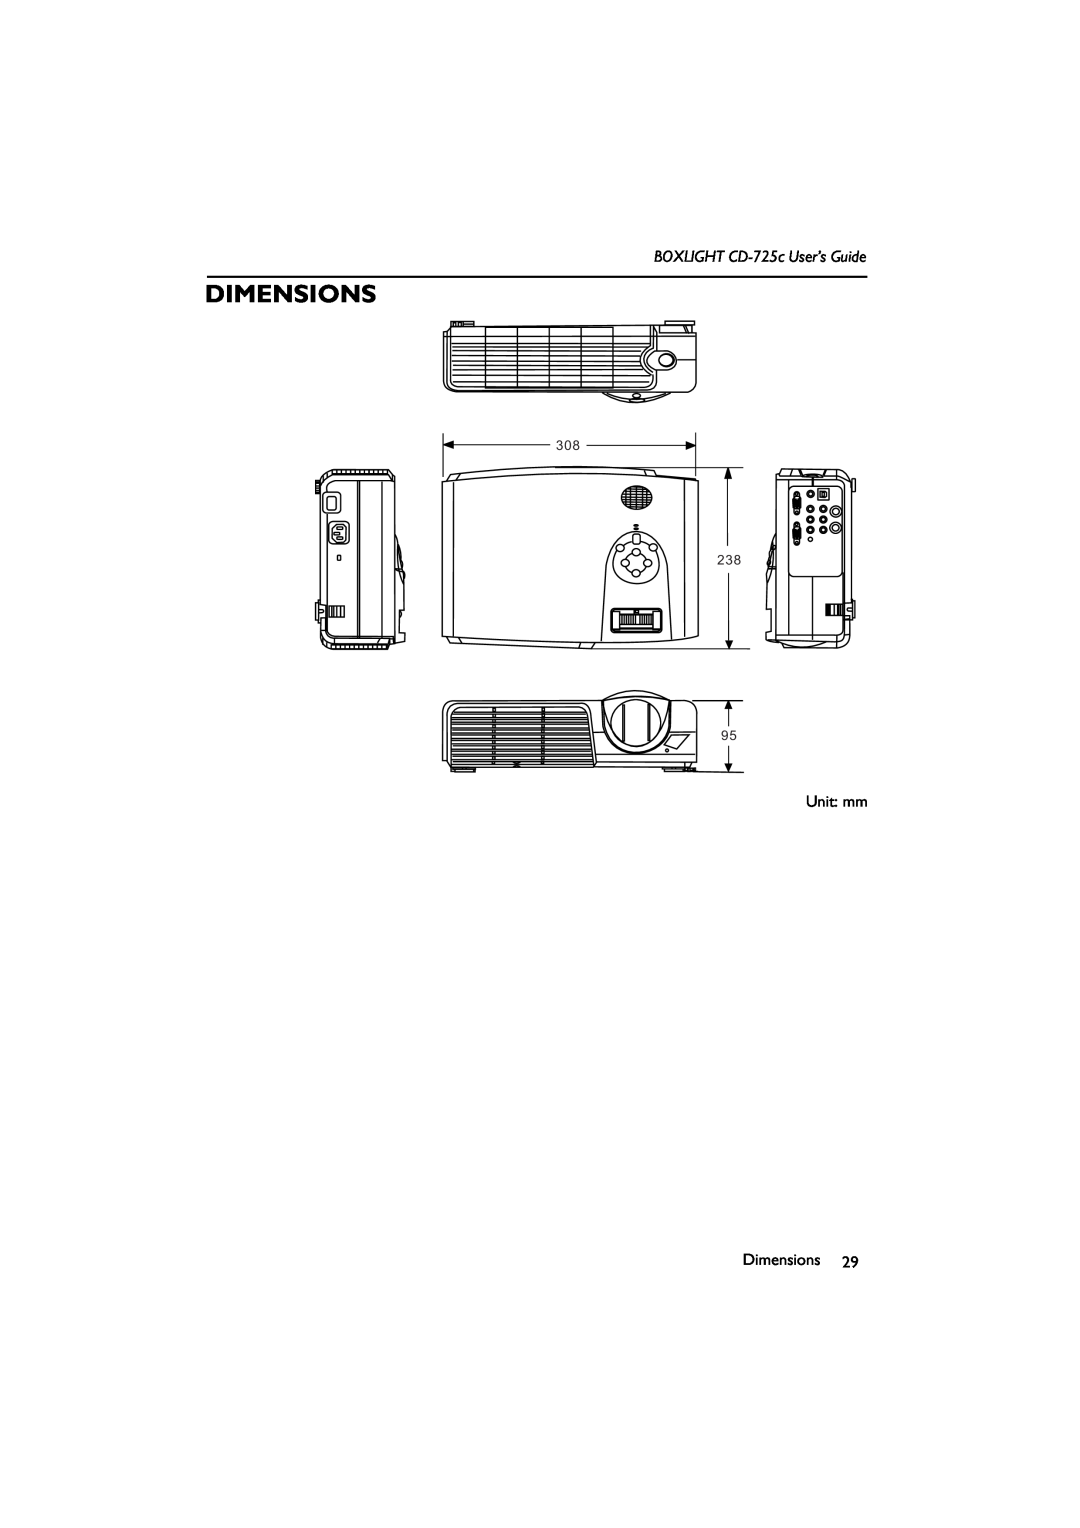 BOXLIGHT manual Dimensions, BOXLIGHT CD-725c User’s Guide, 308 238 